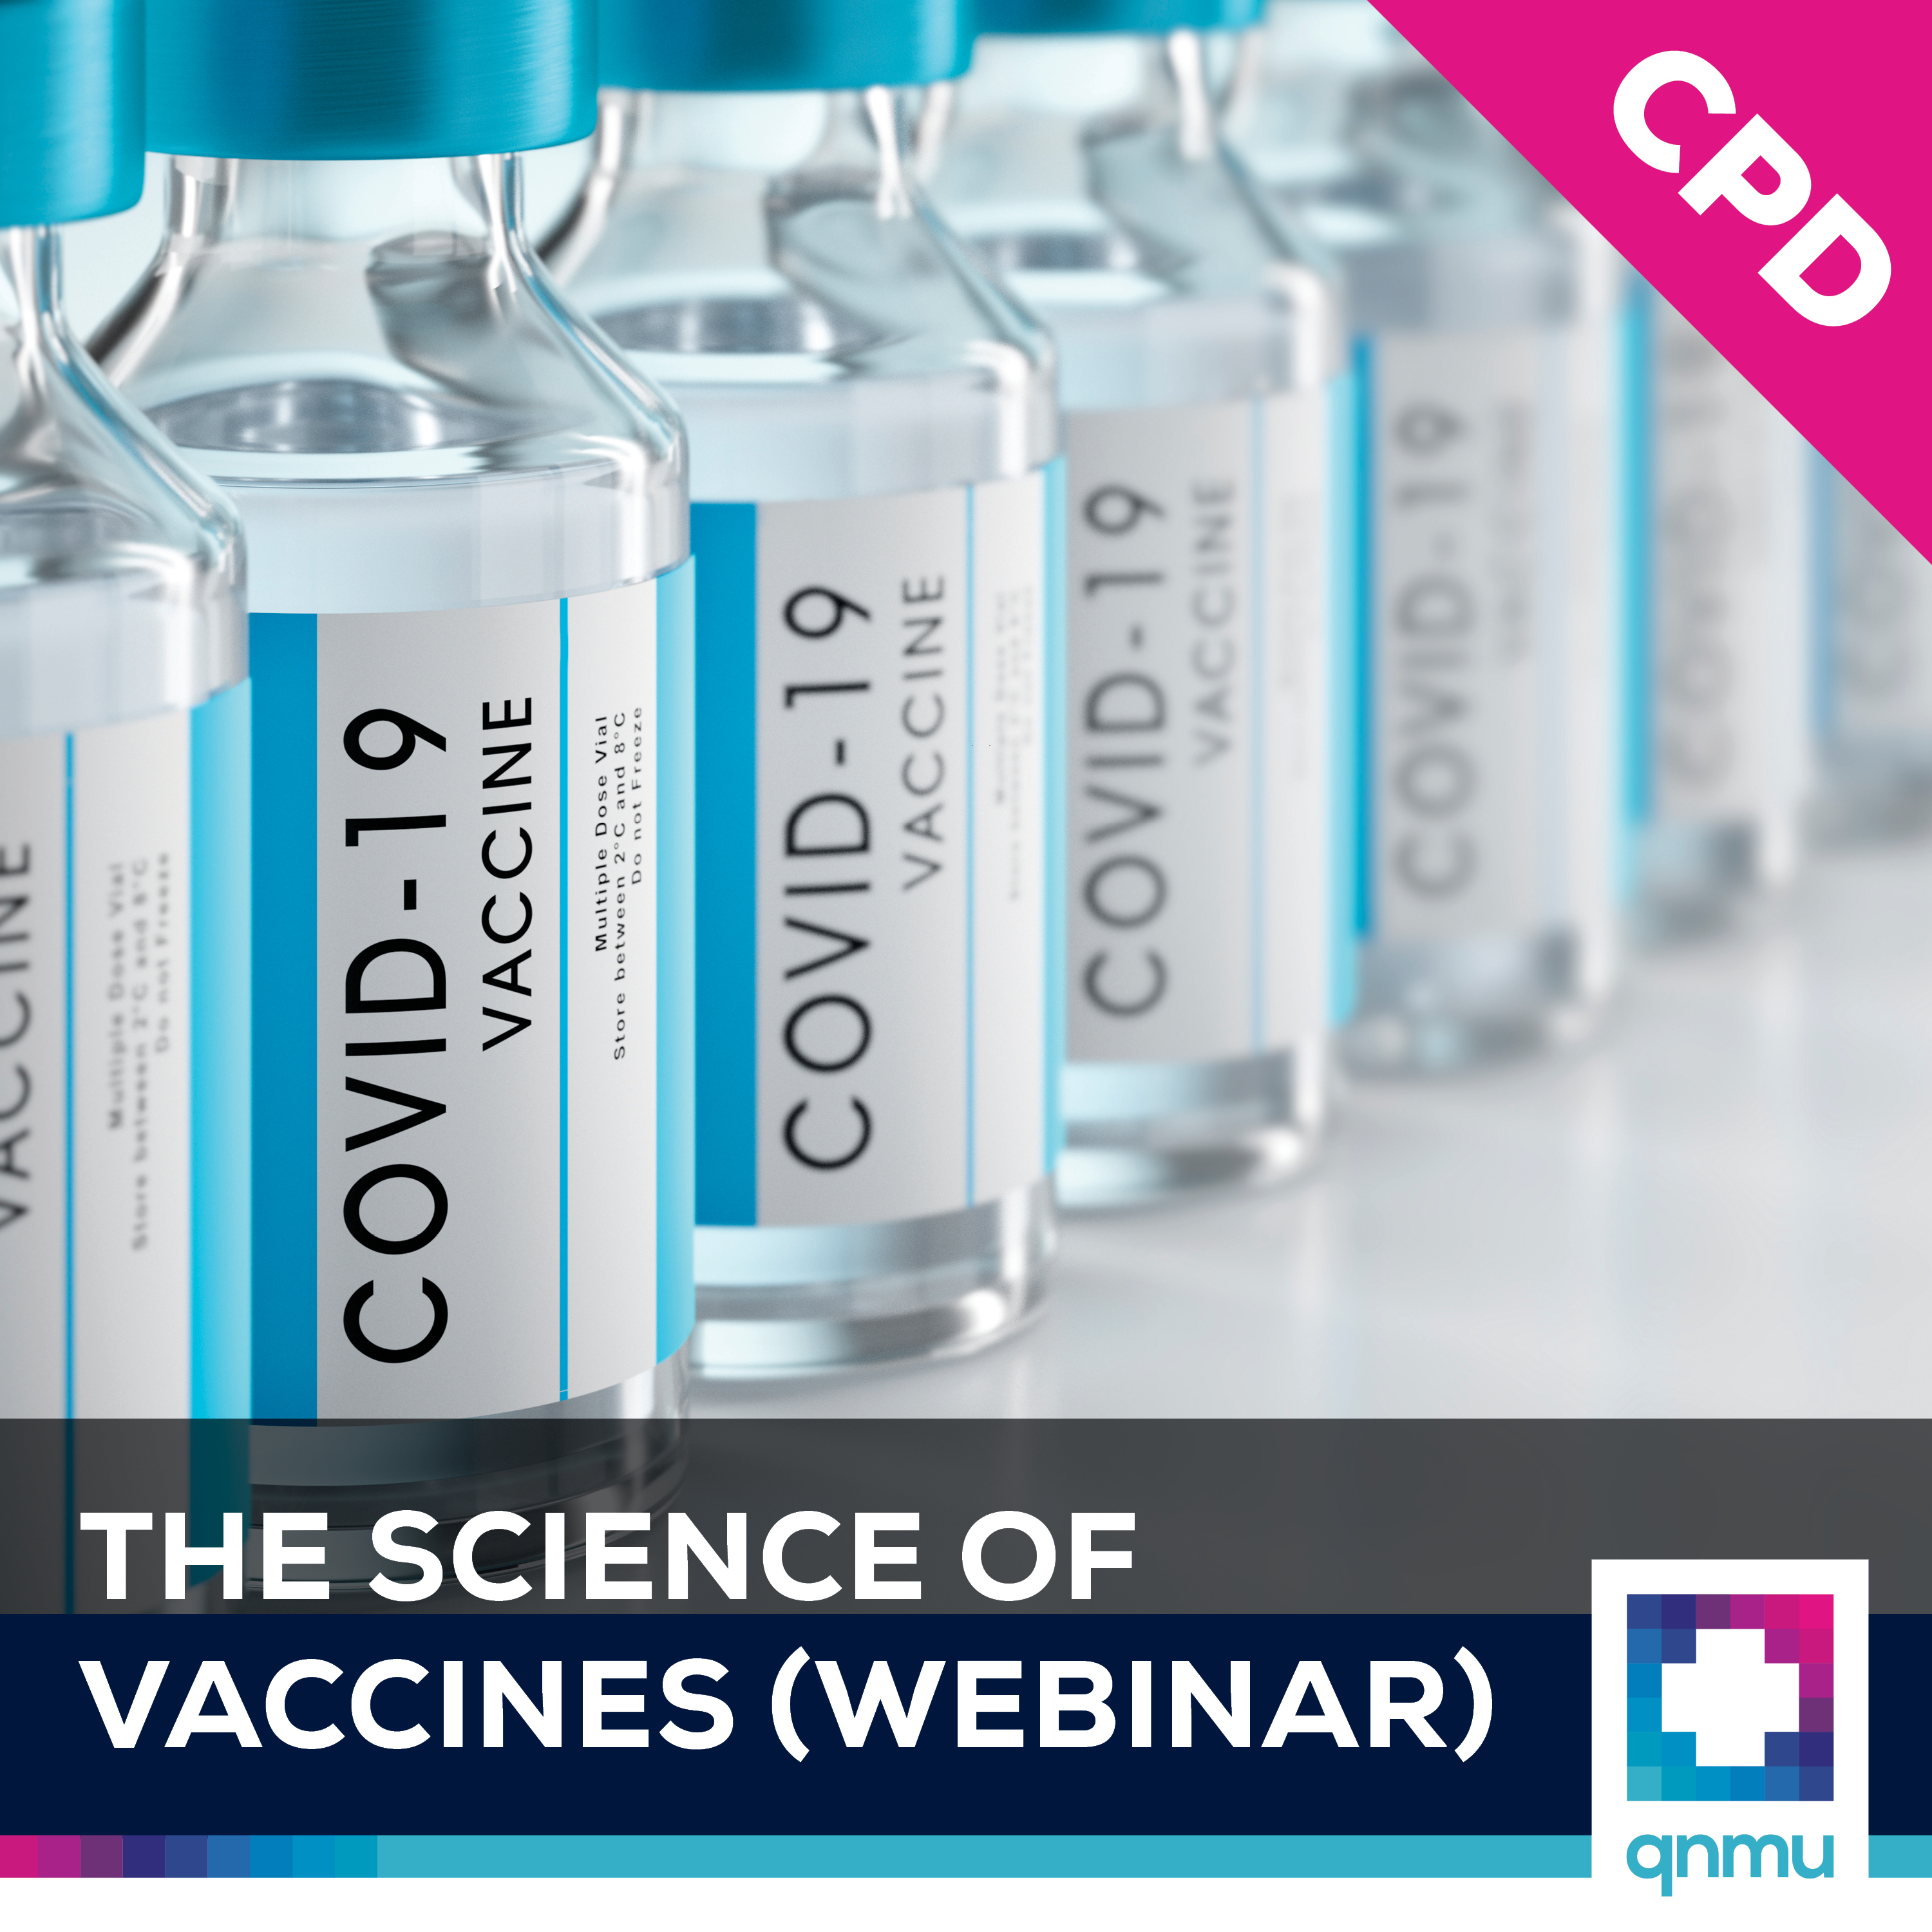 The Science of Vaccines Webinar